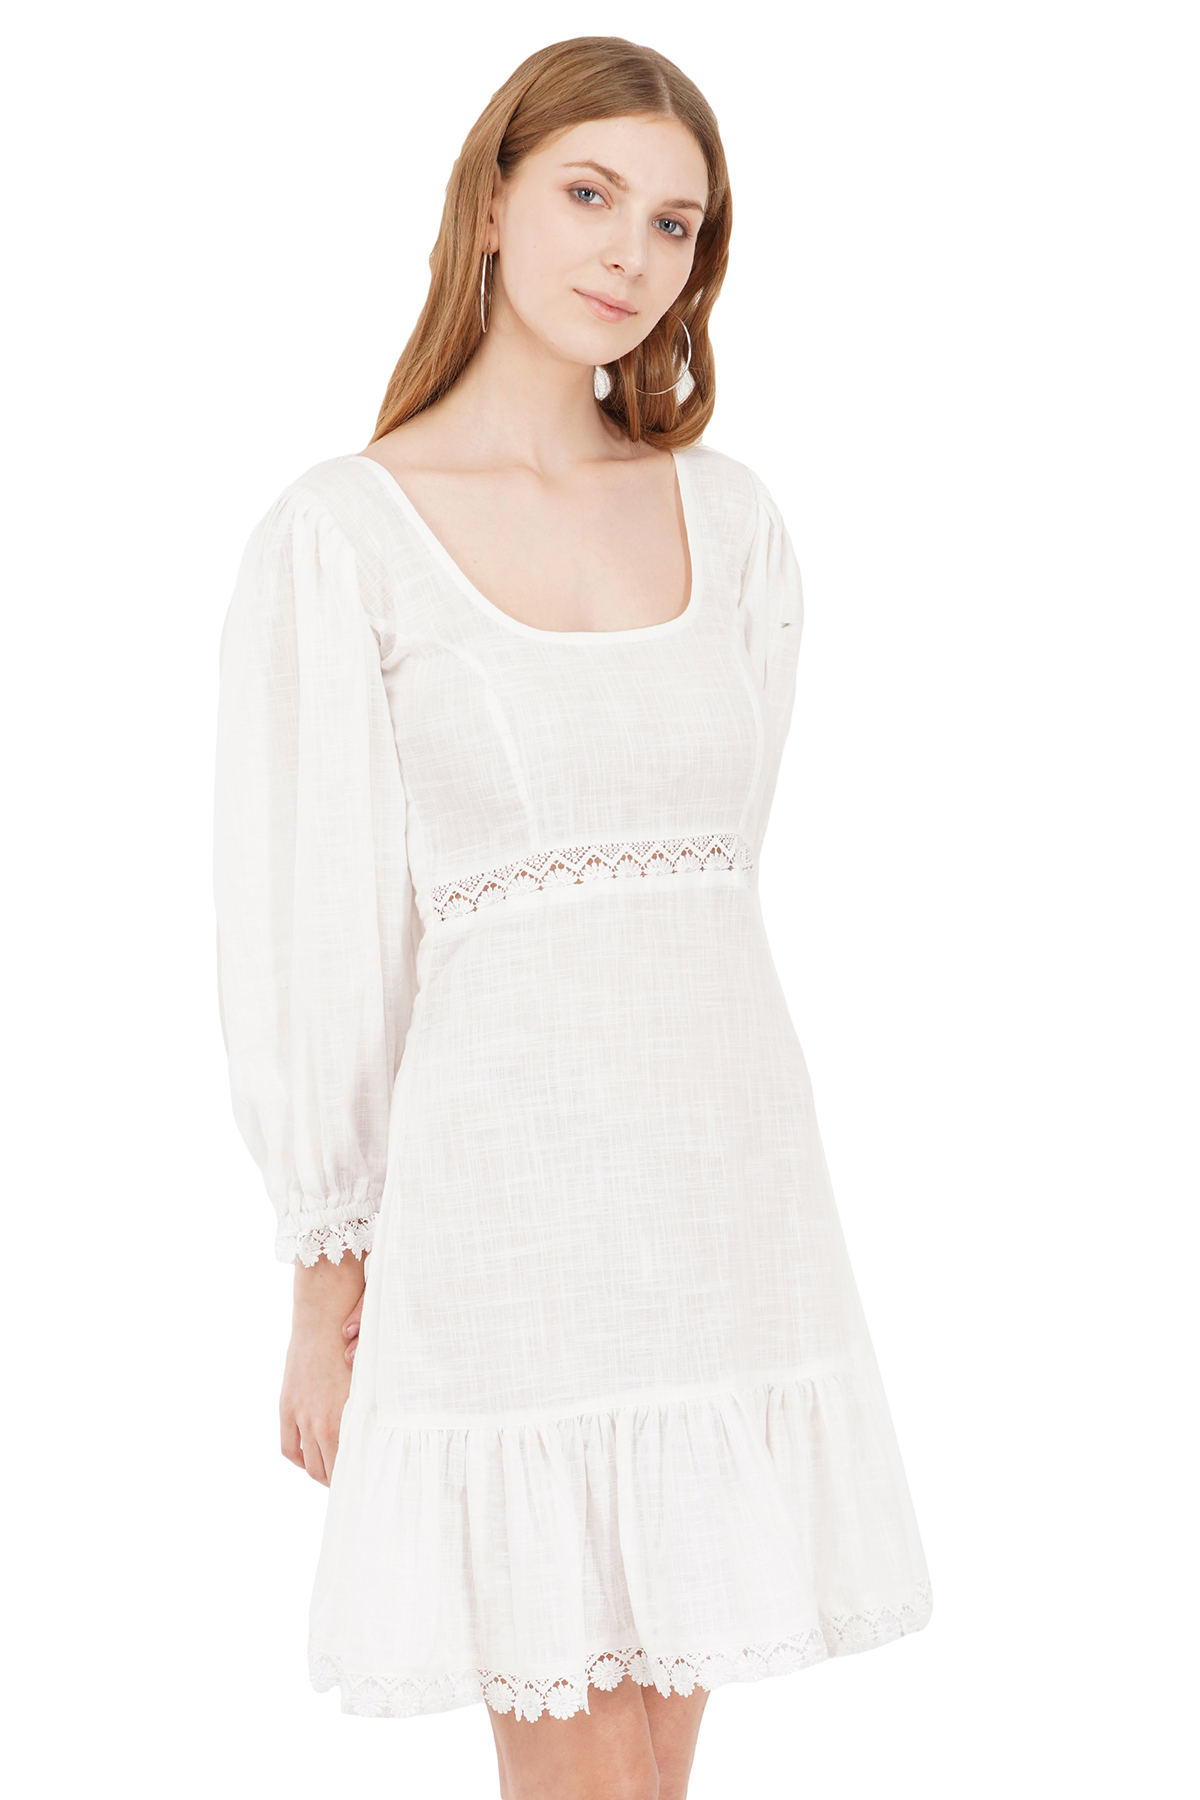 Constance white dress – flooms